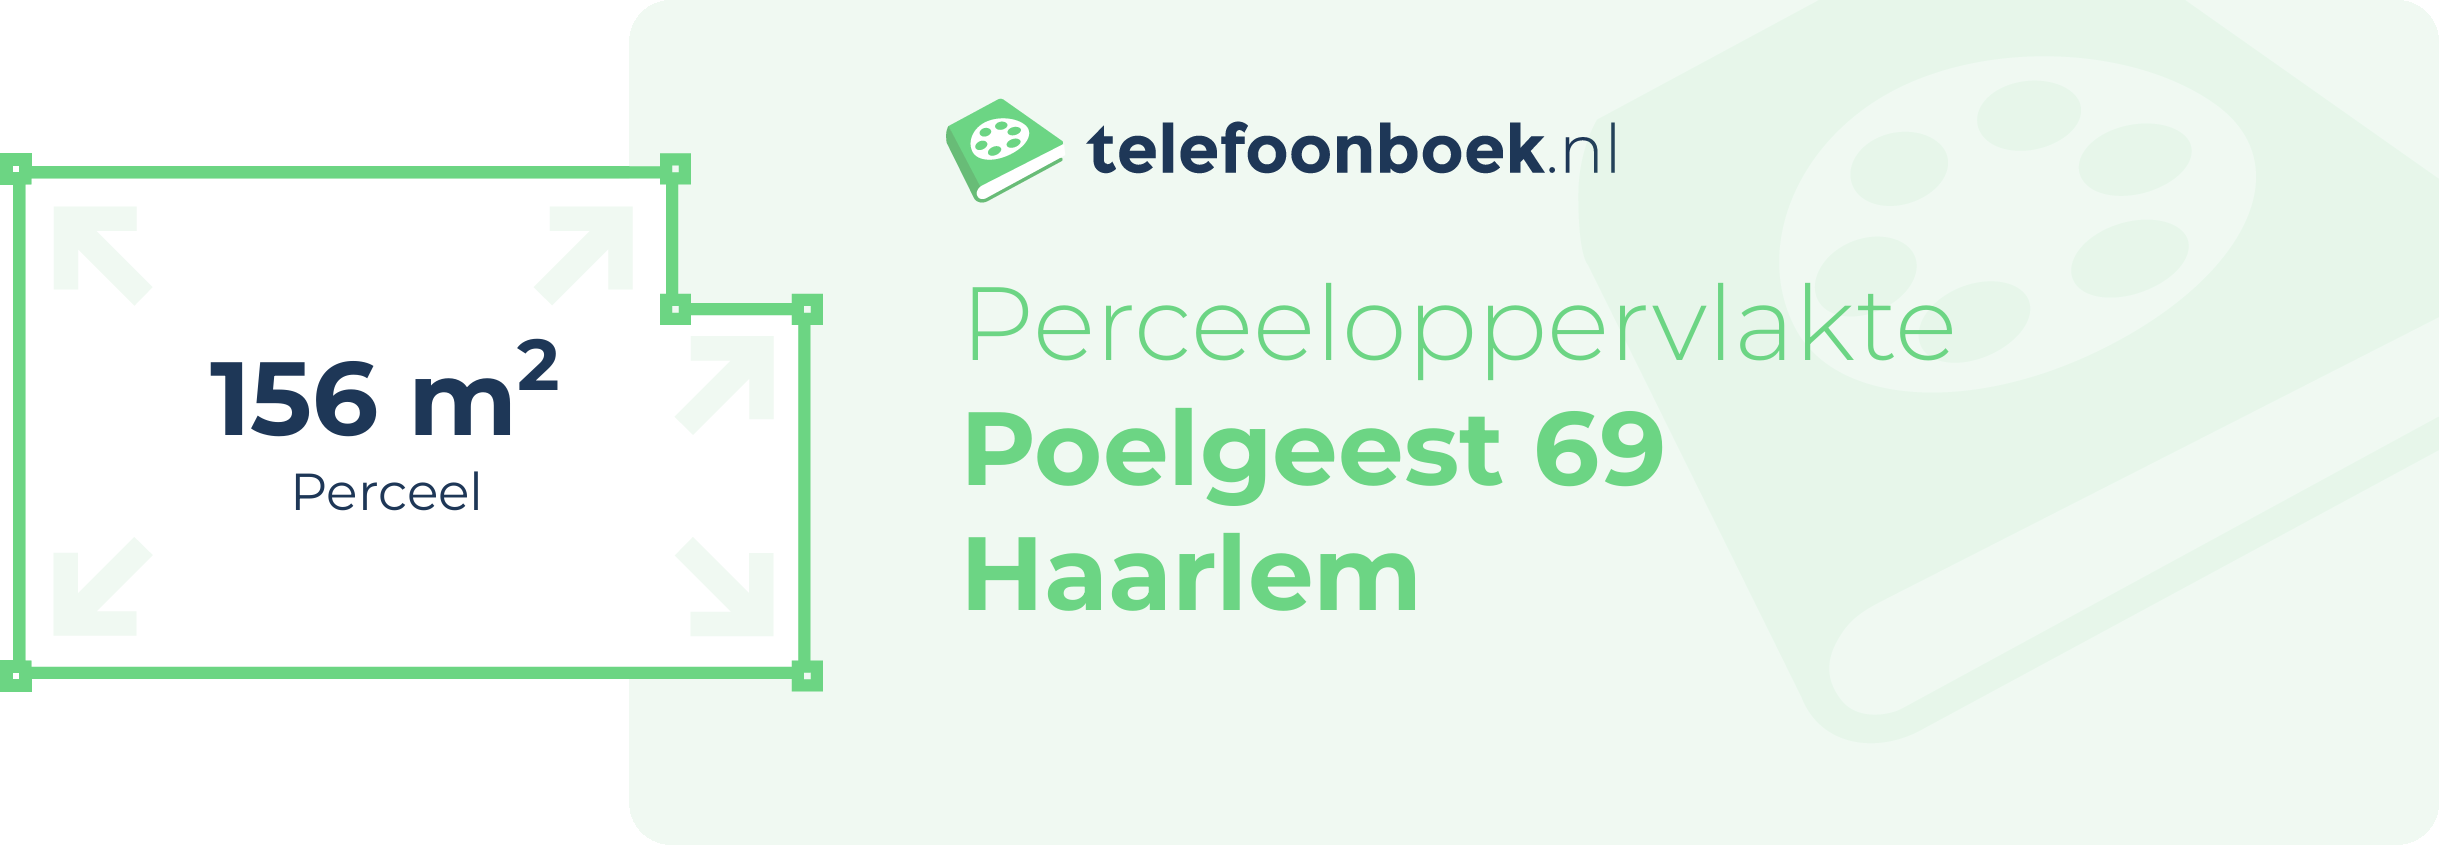 Perceeloppervlakte Poelgeest 69 Haarlem